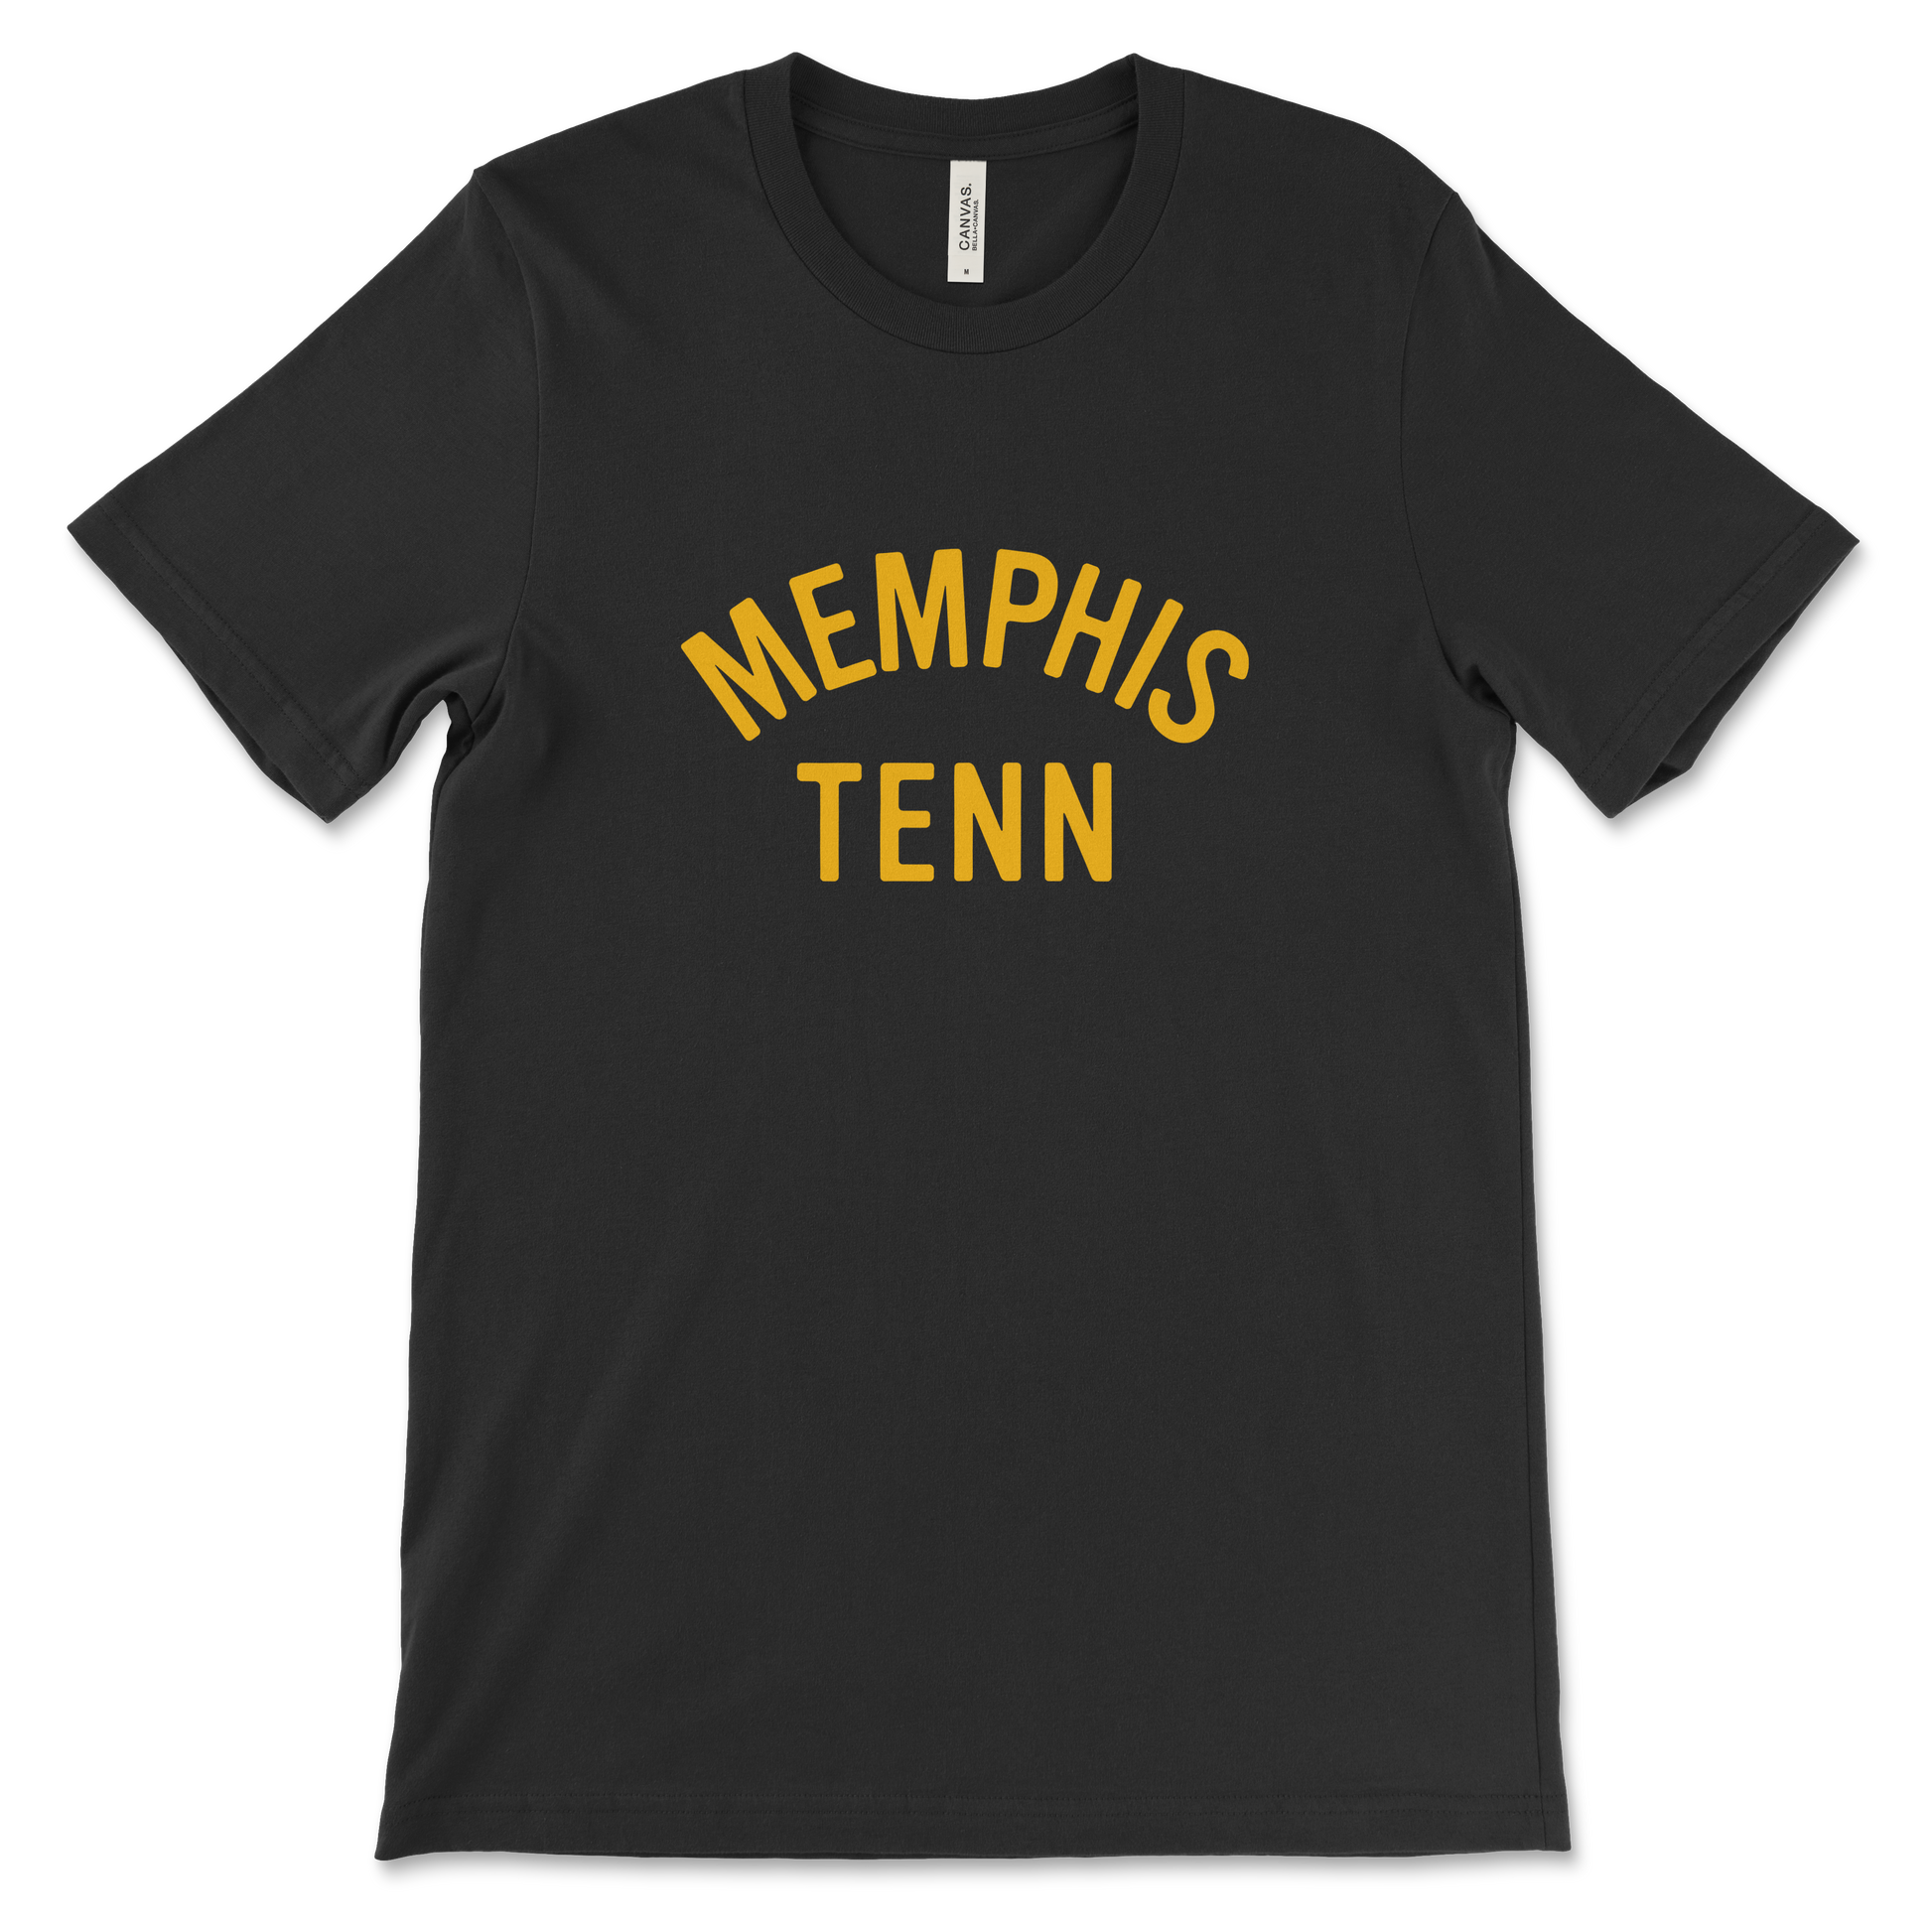 Black MEMPHIS TENN TEE with "Choose901 Memphis" text in yellow.